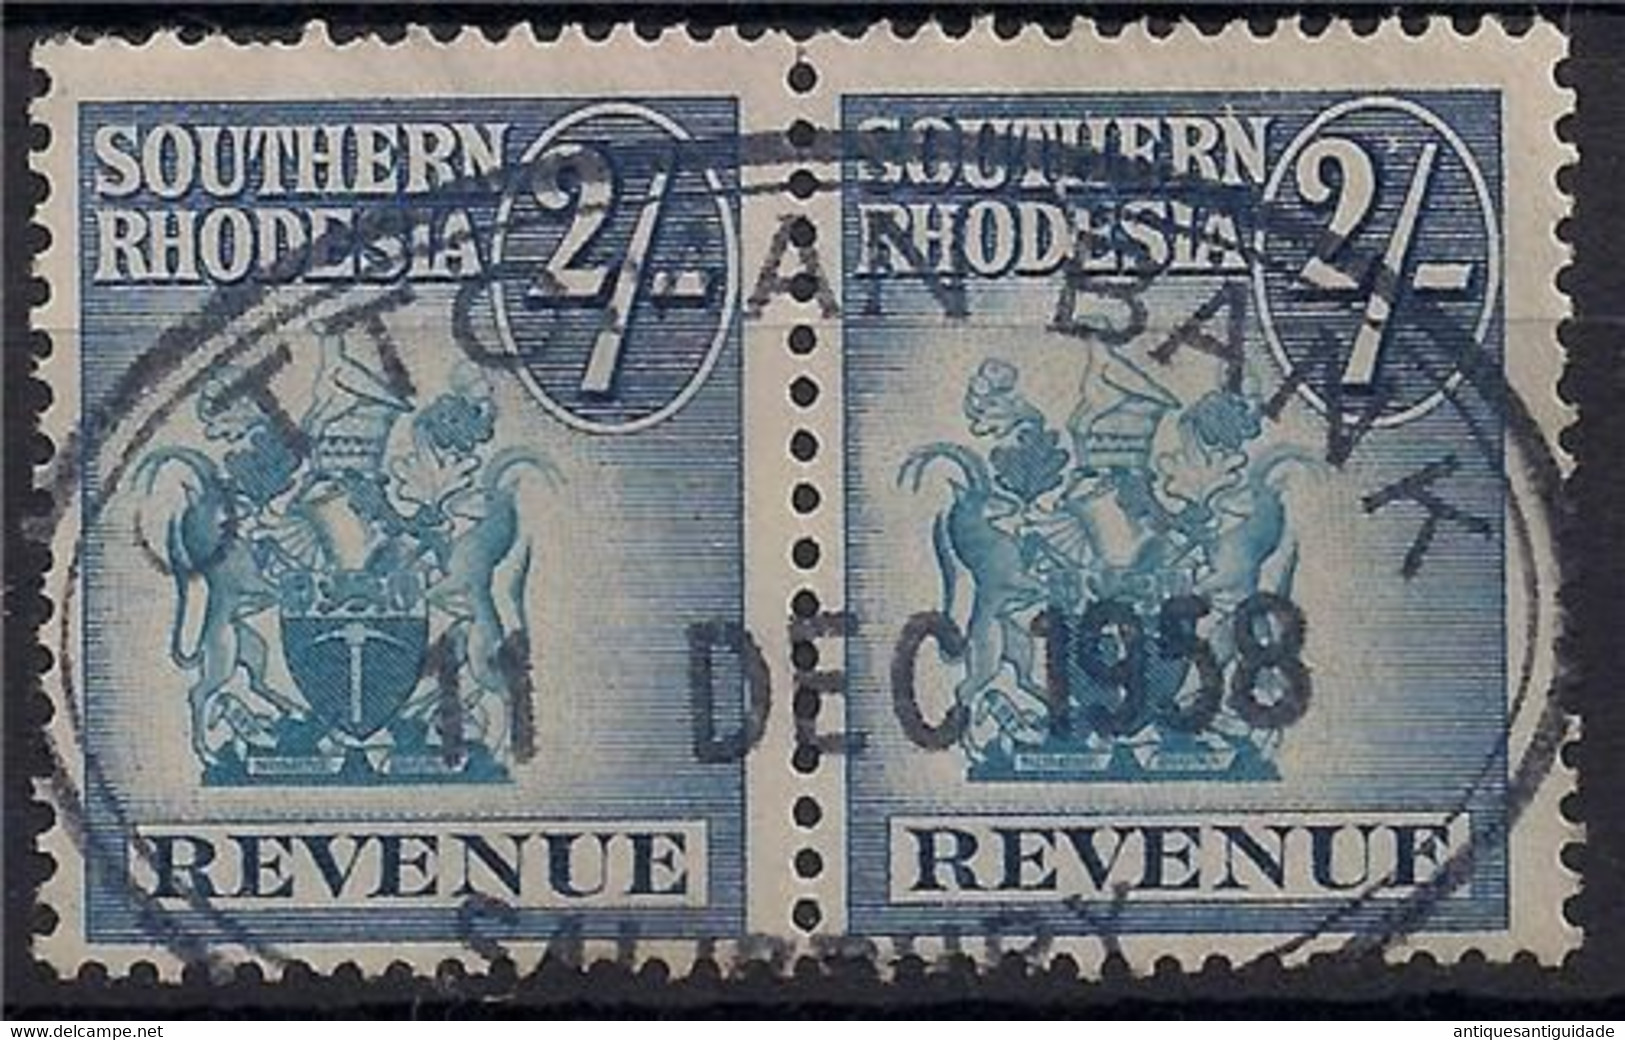 Southern Rhodesia Revenue Duty Stamp 2/ 11-12-1958 OVAL "OTTOMAN BANK" CANCEL - Rhodésie & Nyasaland (1954-1963)